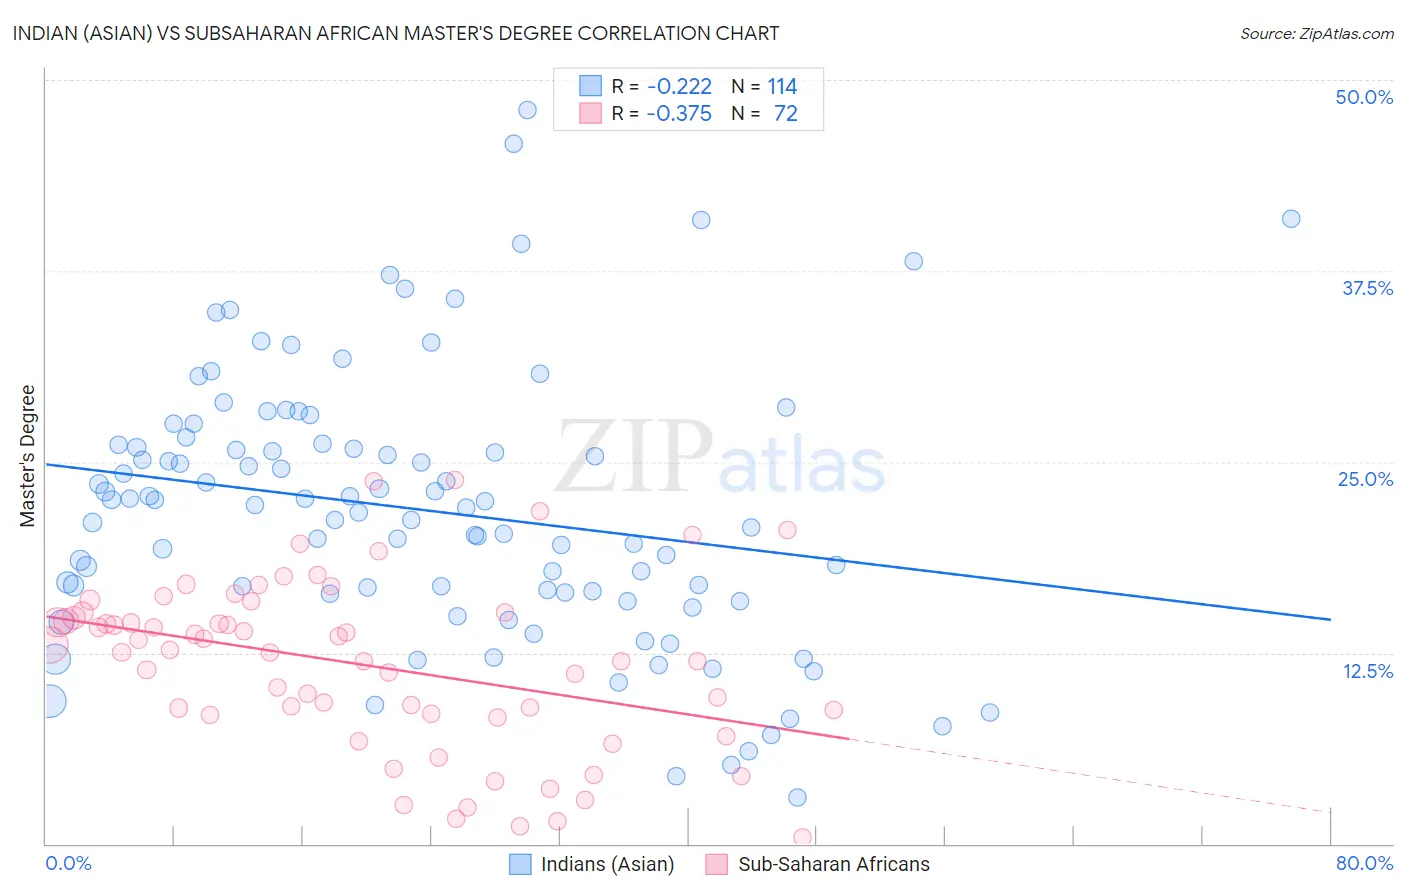 Indian (Asian) vs Subsaharan African Master's Degree